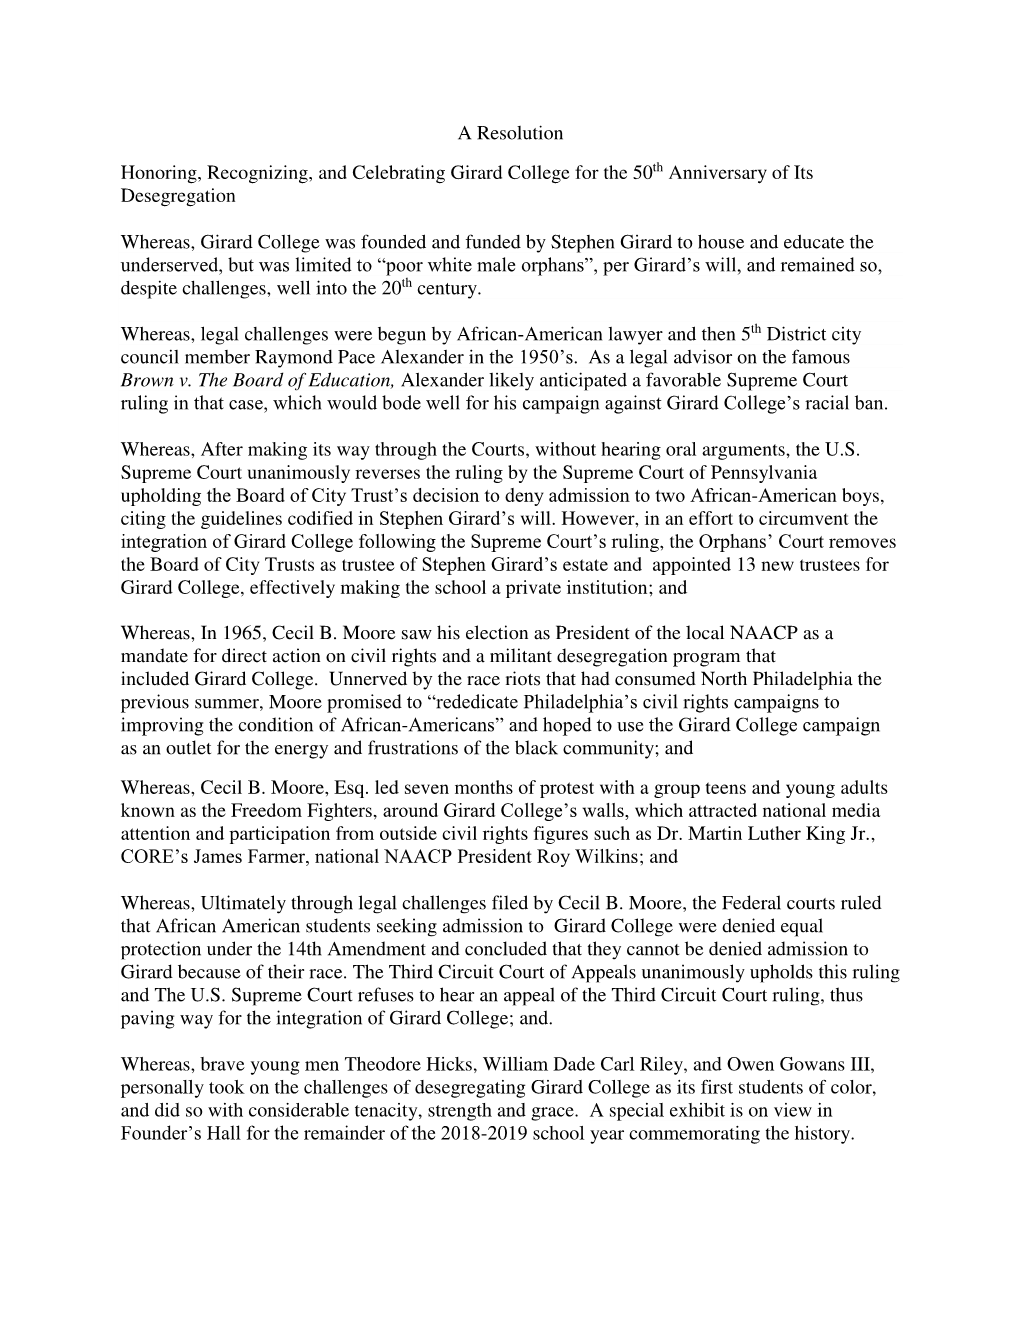 Resolution – Girard College 50Th Anniversary of Desegregation